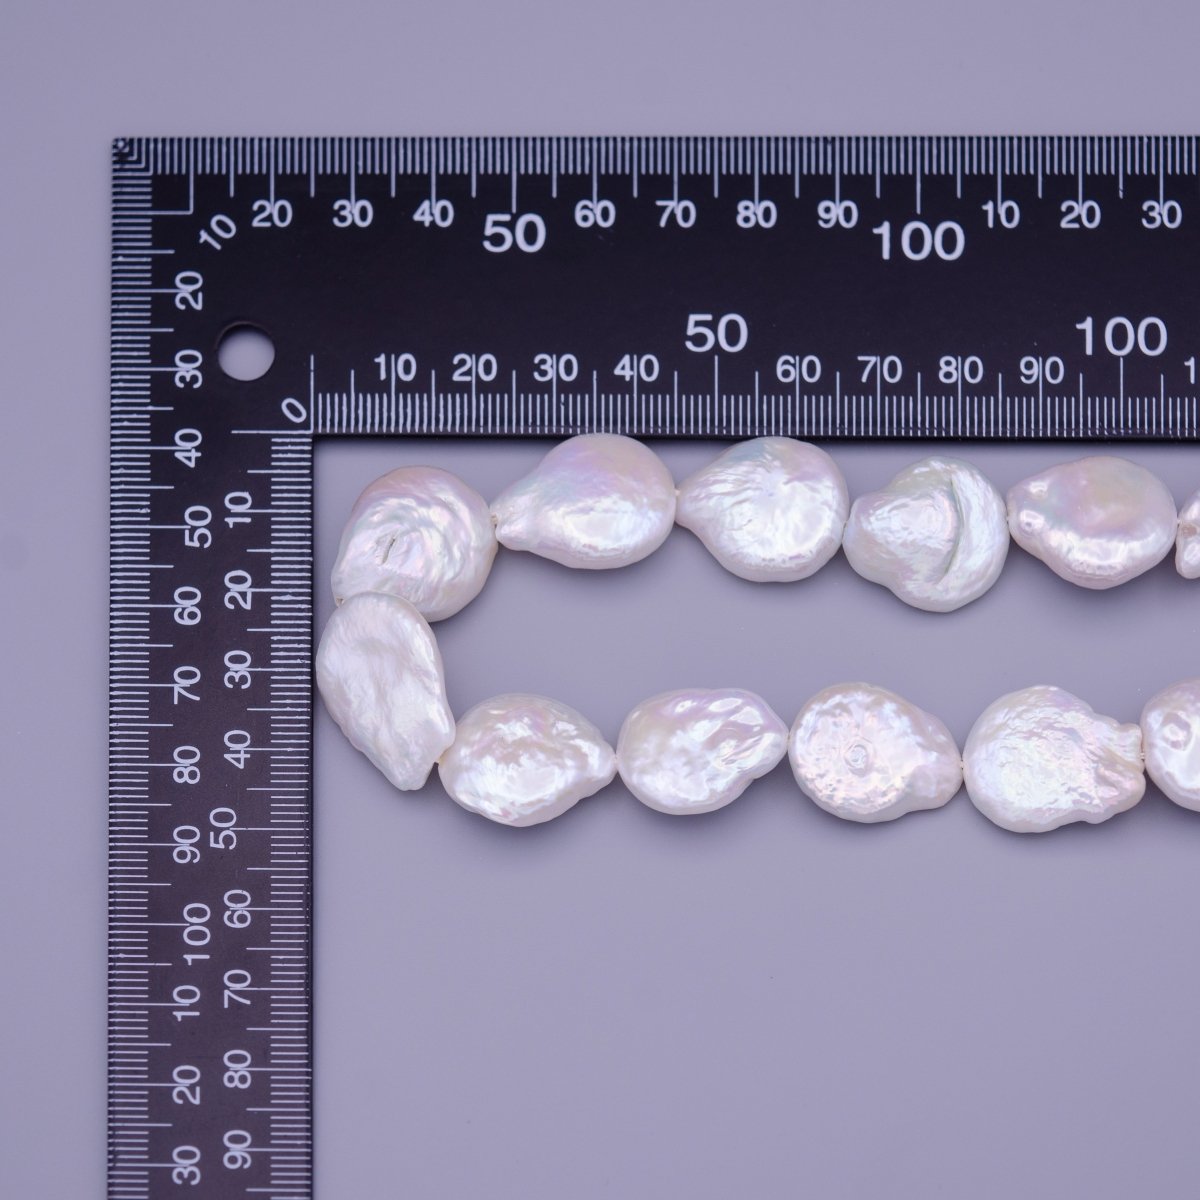 18.4mm Natural Flat Heishi Freshwater Pearls 20pcs Full Strand | WA-1326 Clearance Pricing - DLUXCA